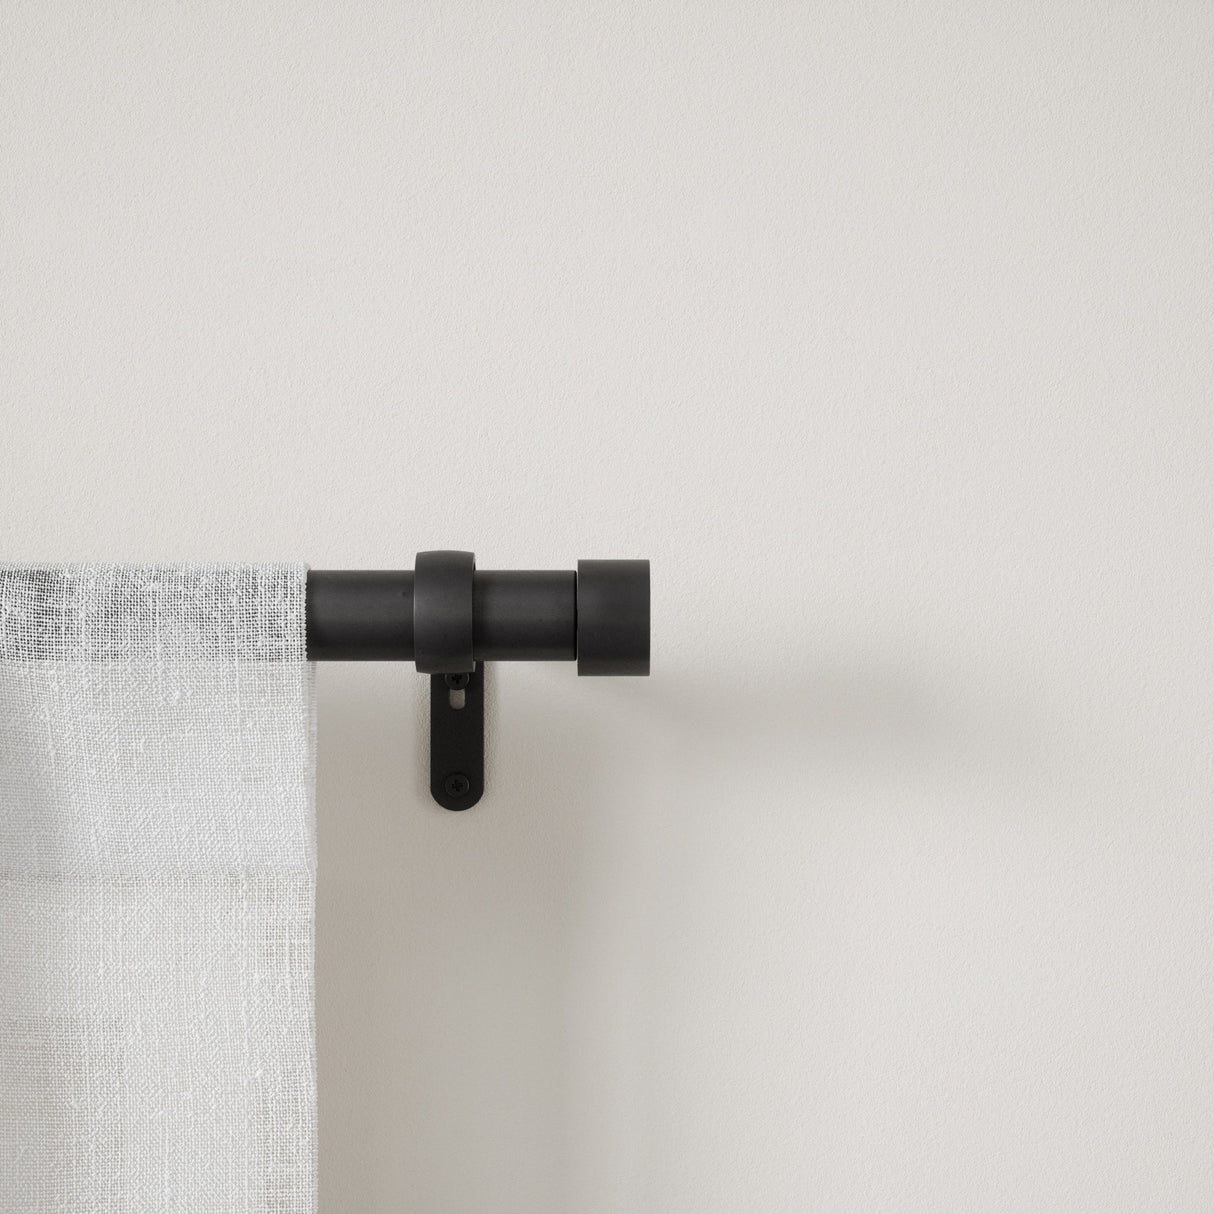 Single Curtain Rods | color: Brushed-Black | size: 66-120" (168-305 cm) | diameter: 1" (2.5 cm) | Hover